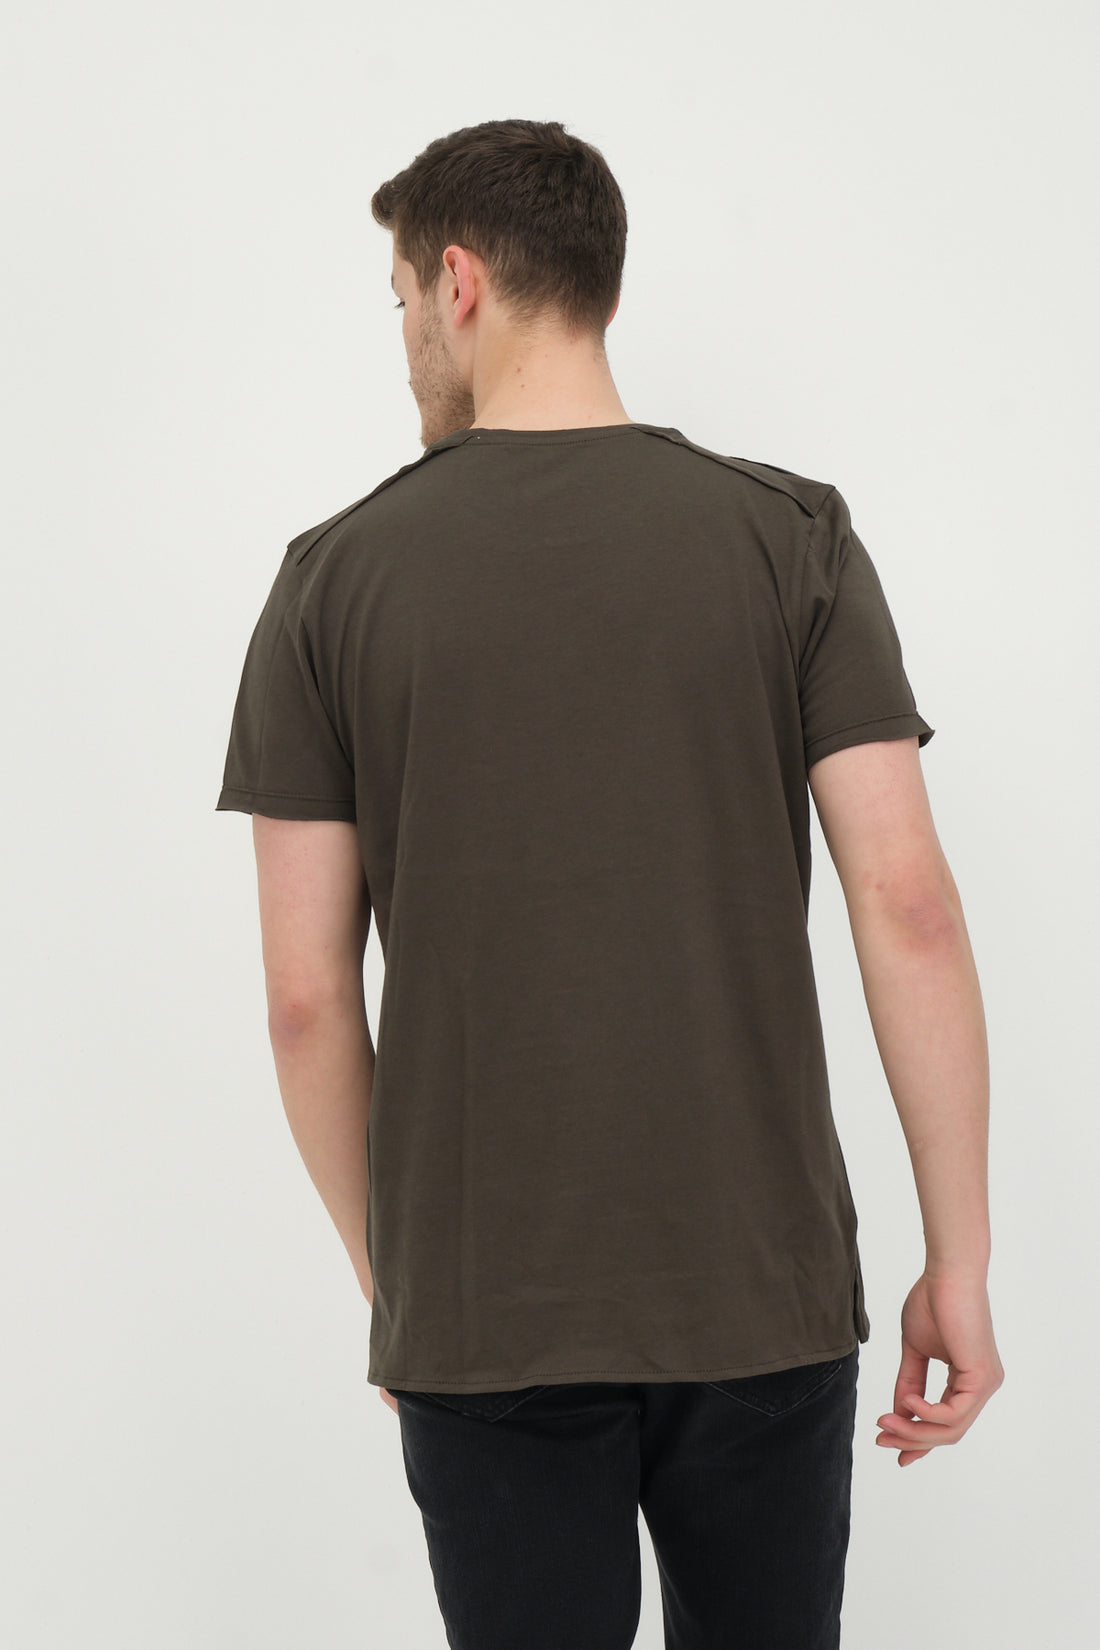 N° 8200 T-Shirt - Khaki - Ron Tomson